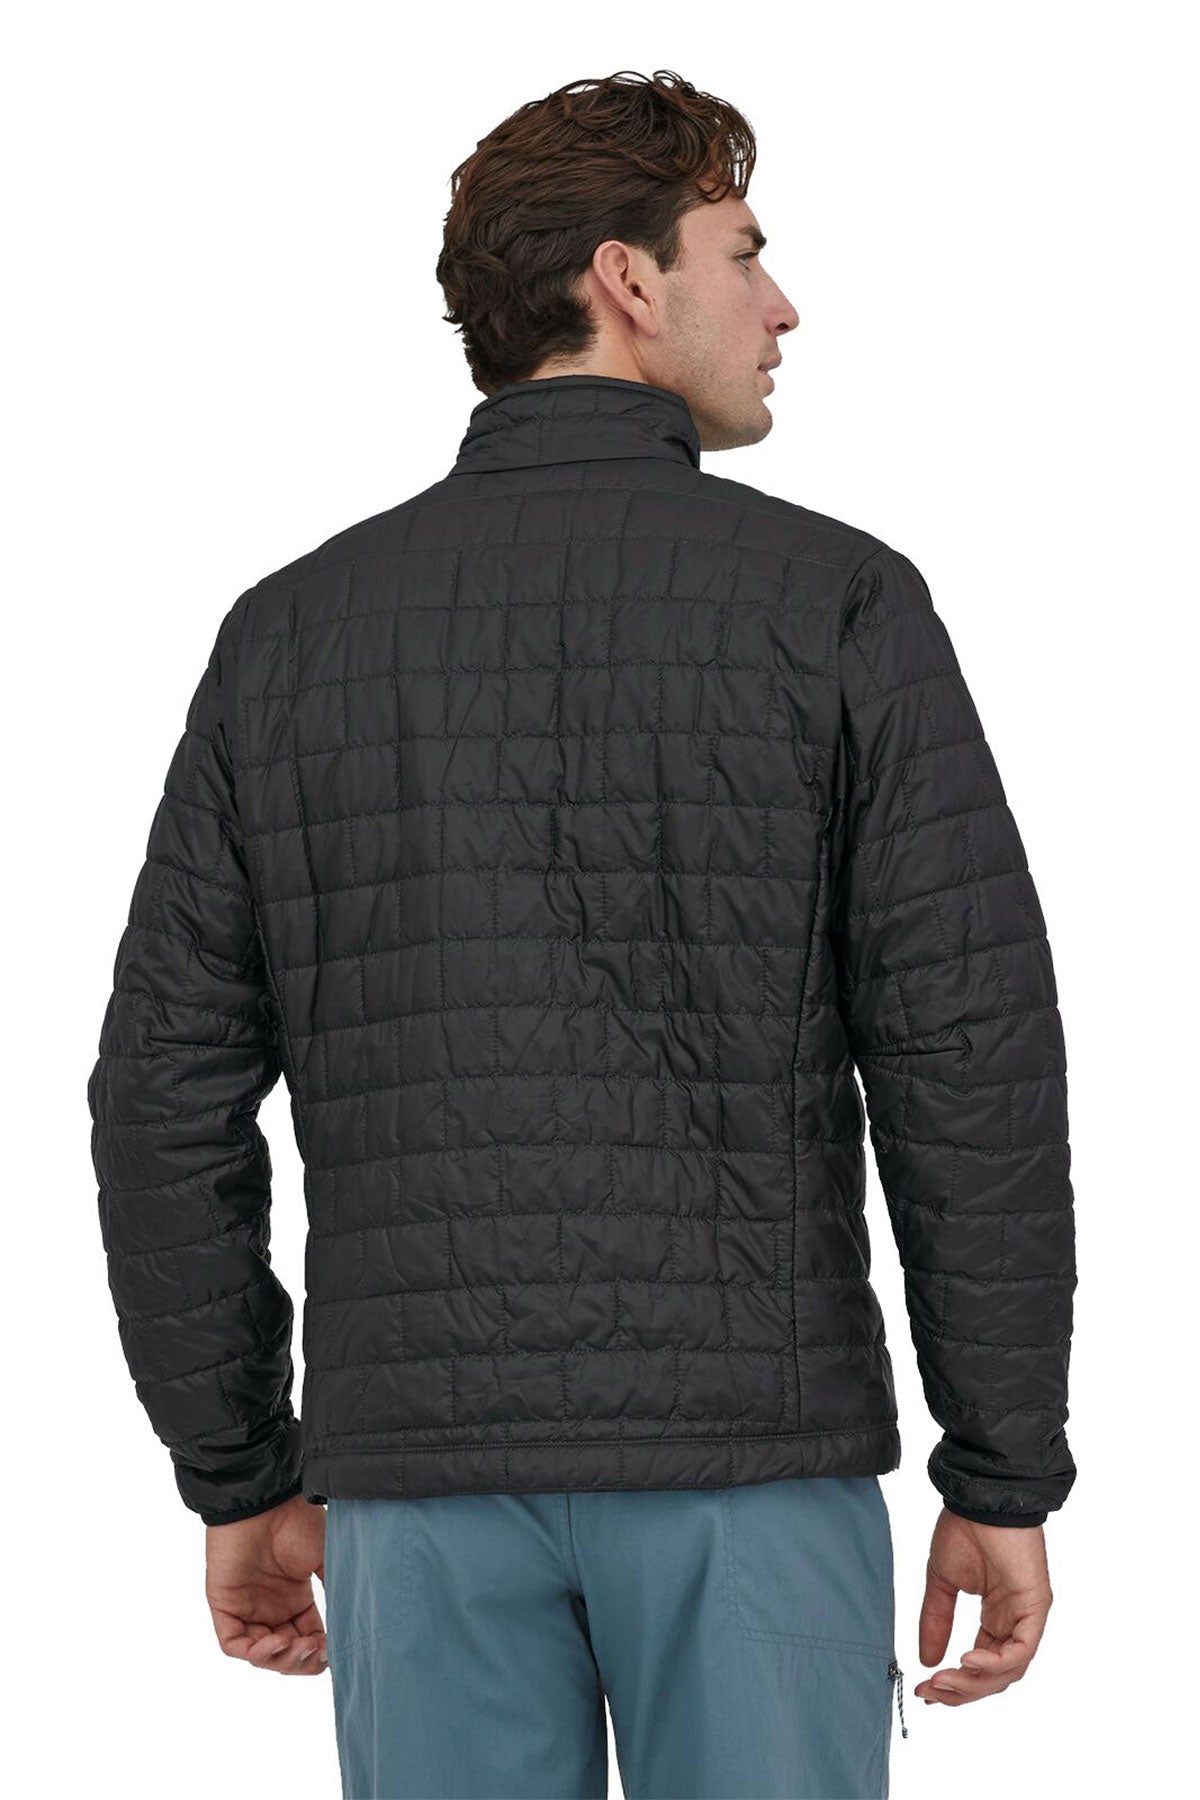 Patagonia Mens Nano Puff Custom Jackets, Black